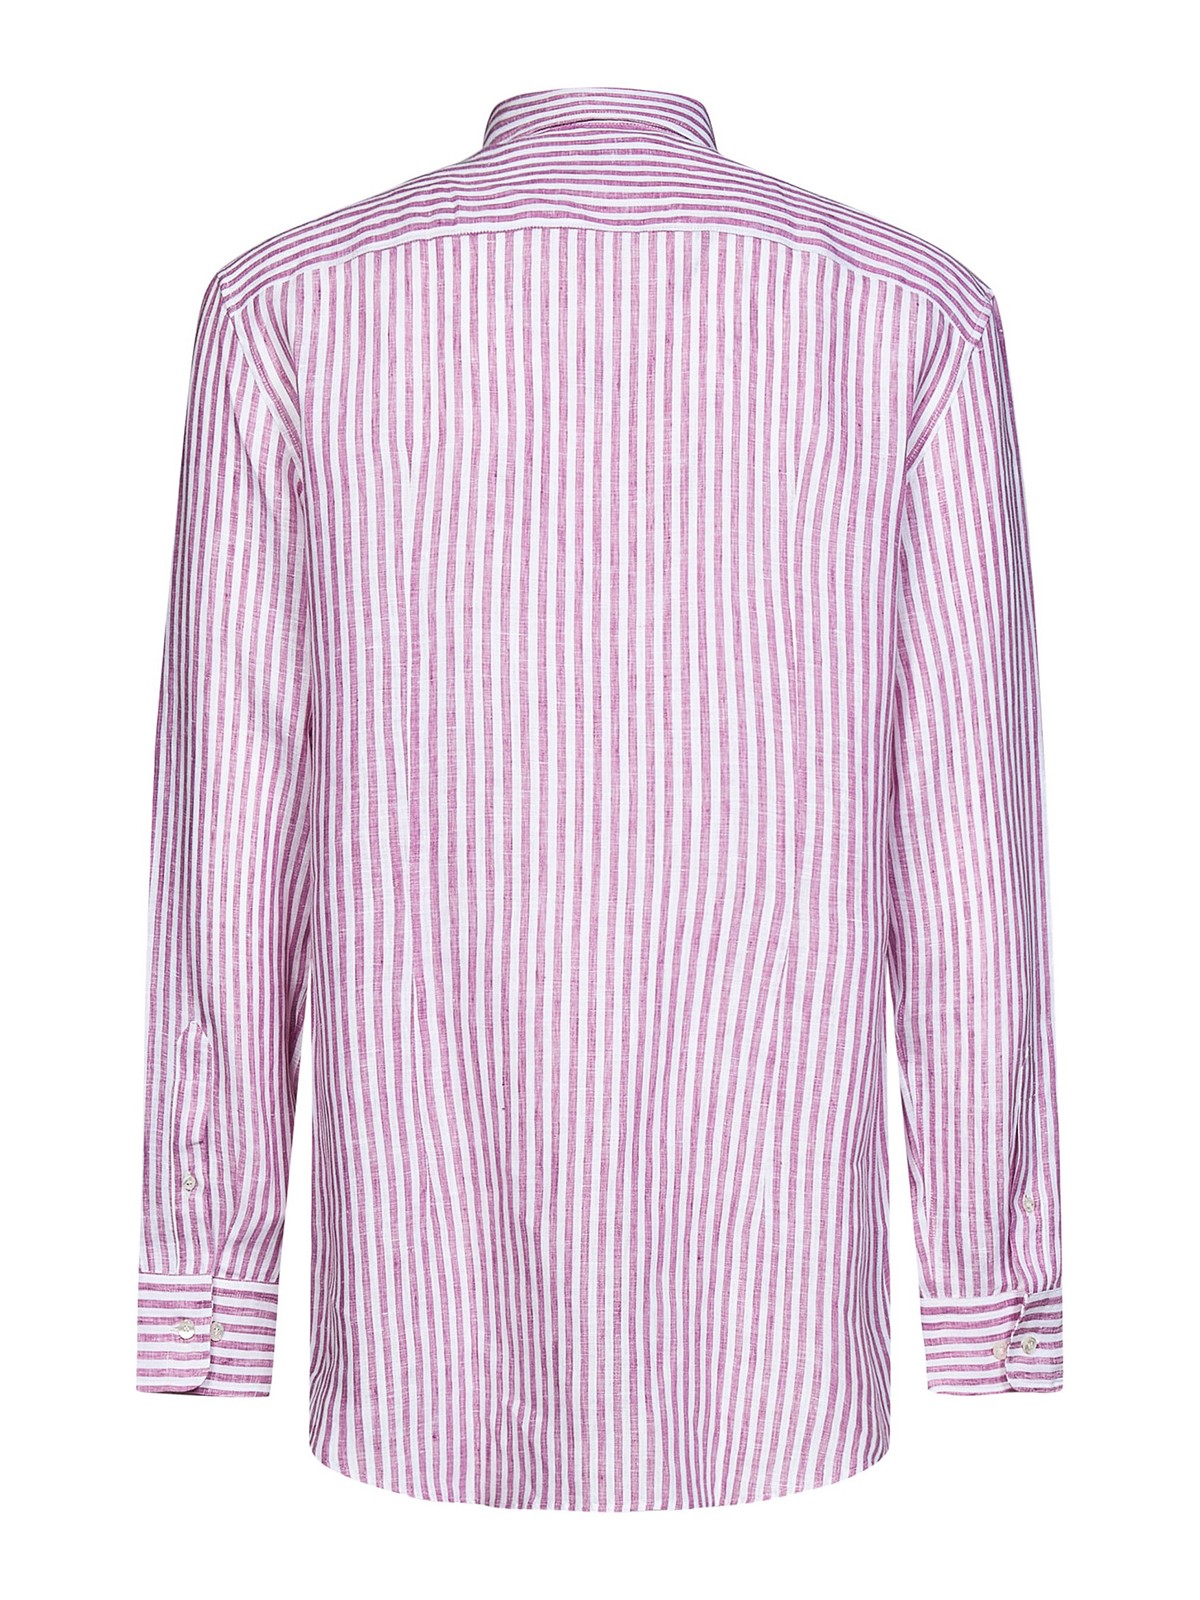 compleet rok Voorschrift Shirts Etro - Stripe pattern shirt - 1K6706103400 | Shop online at iKRIX